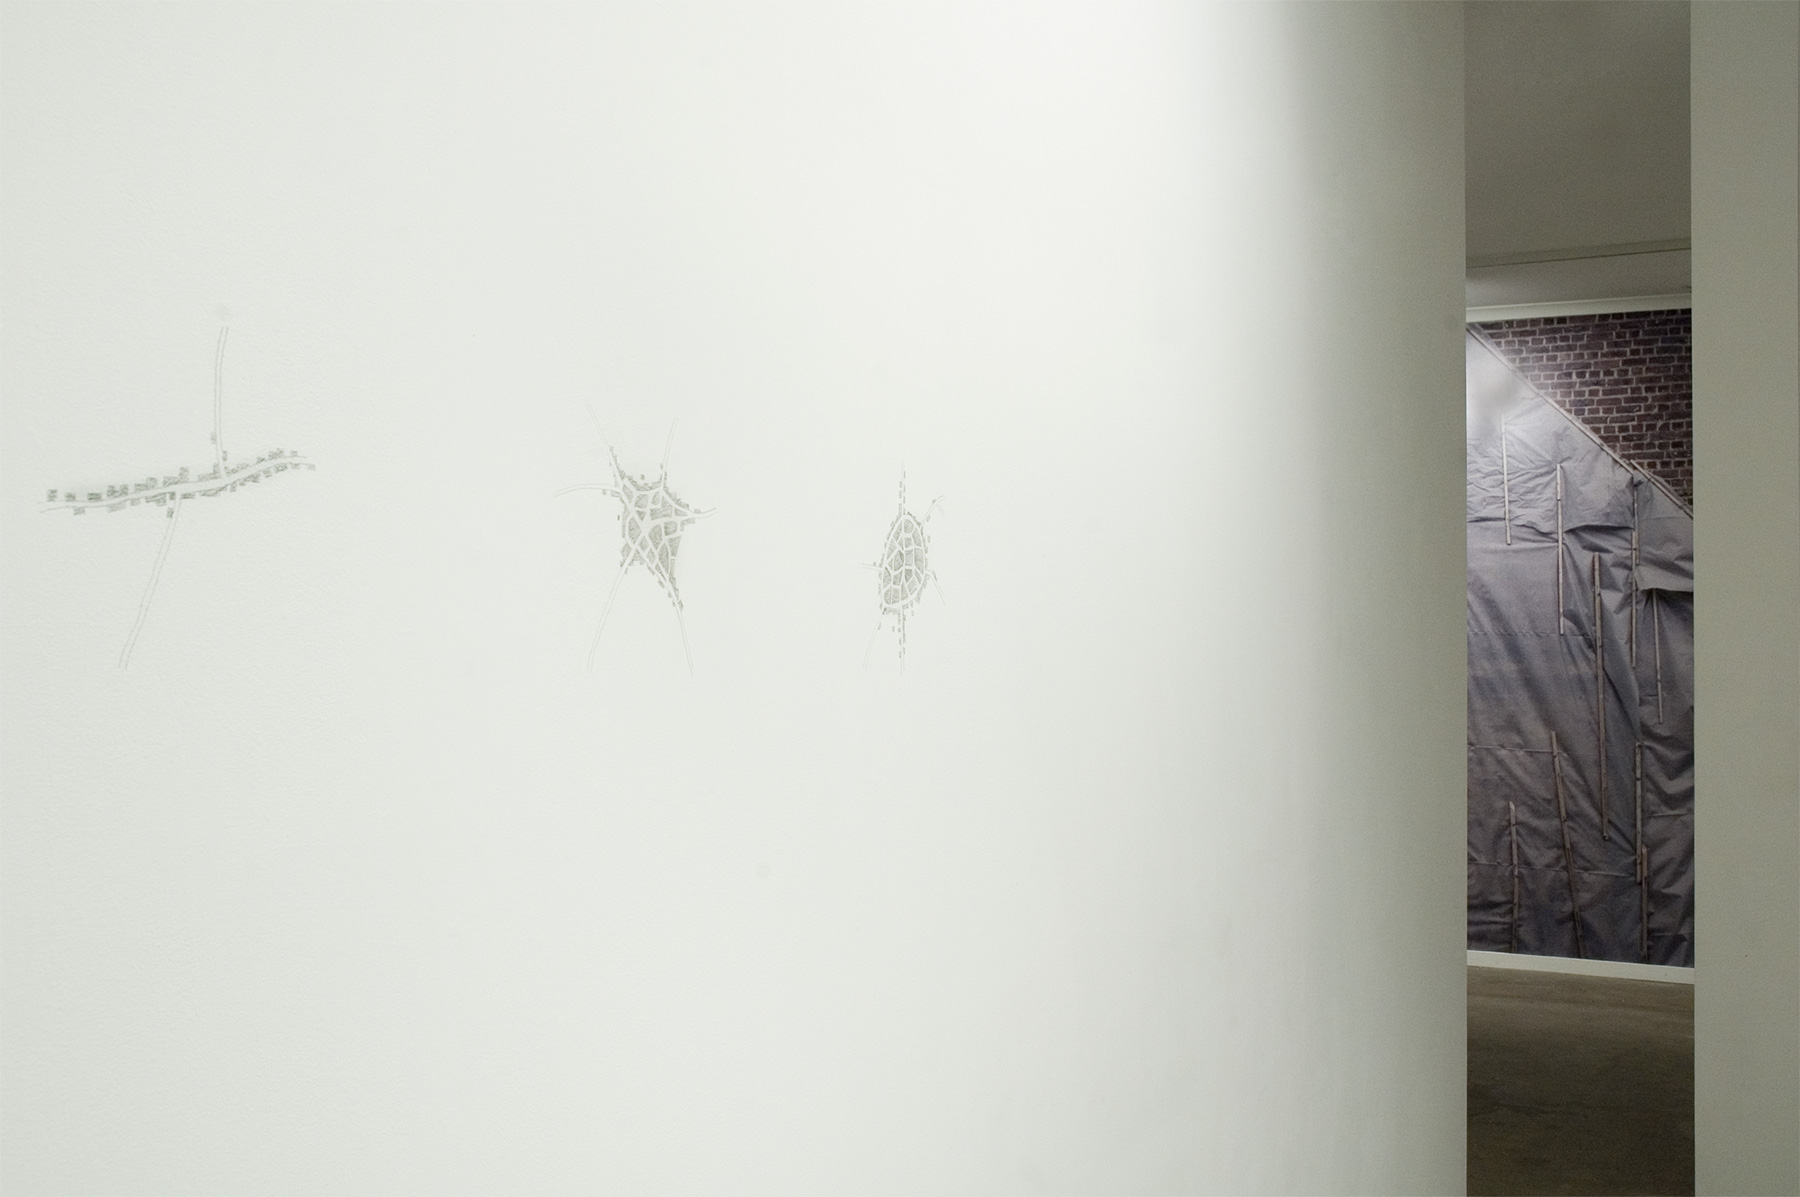    Maps  &nbsp;2009  3 pencil drawings on wall&nbsp; 14 x 20 cm each installation view 